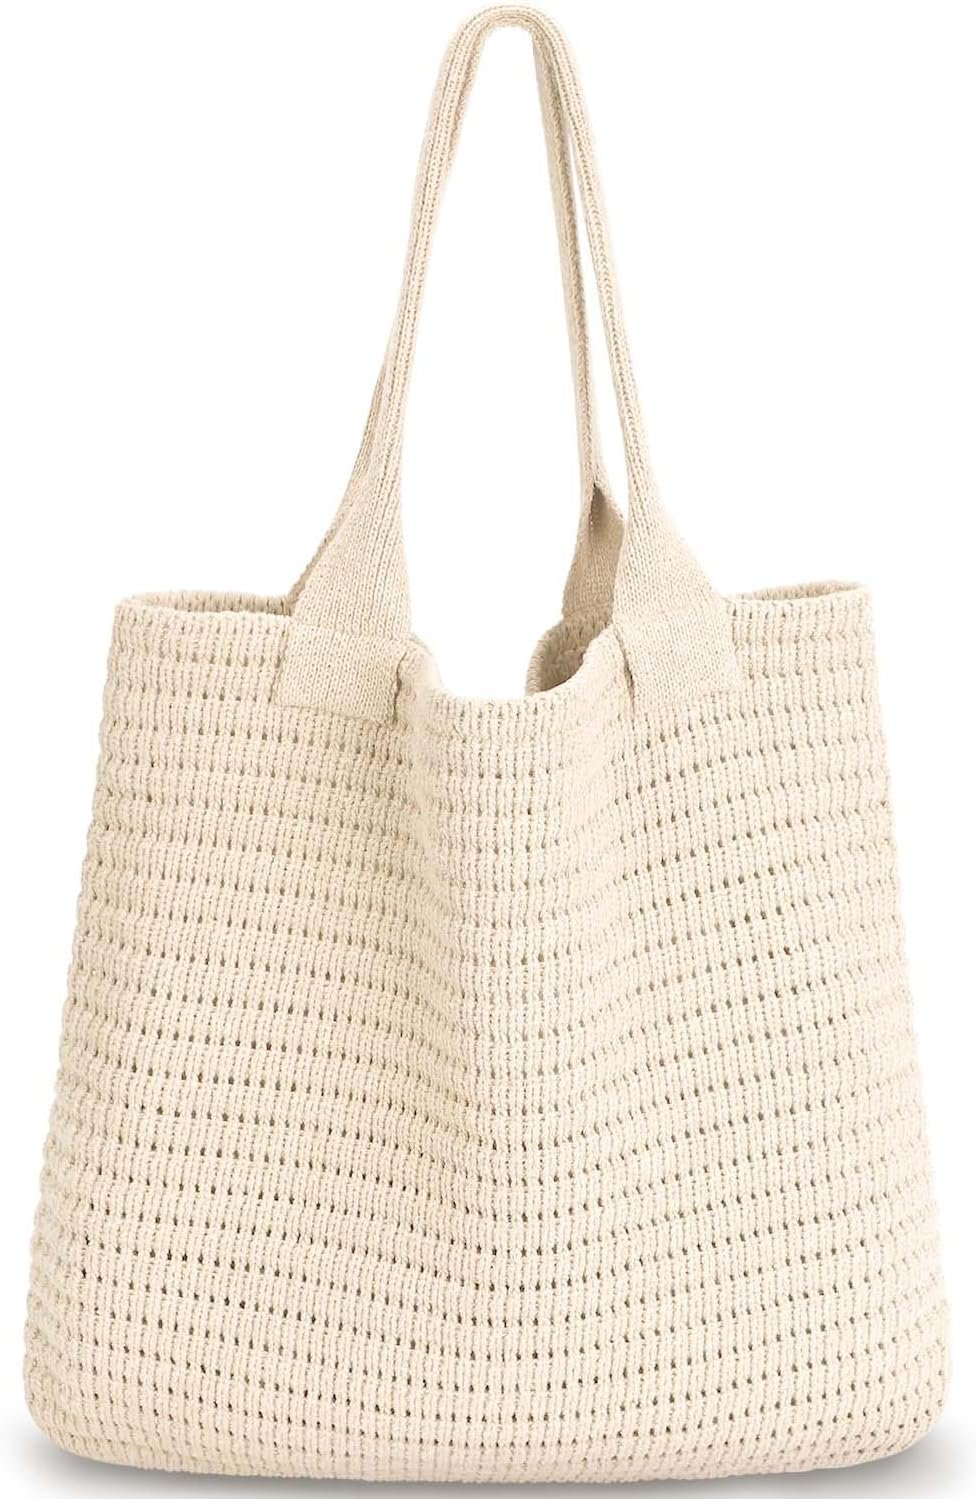 hatisan Crochet Bags for Women Large Tote Bag Aesthetic Handbag Shoulder Bag Hippie Bag Knit Bag